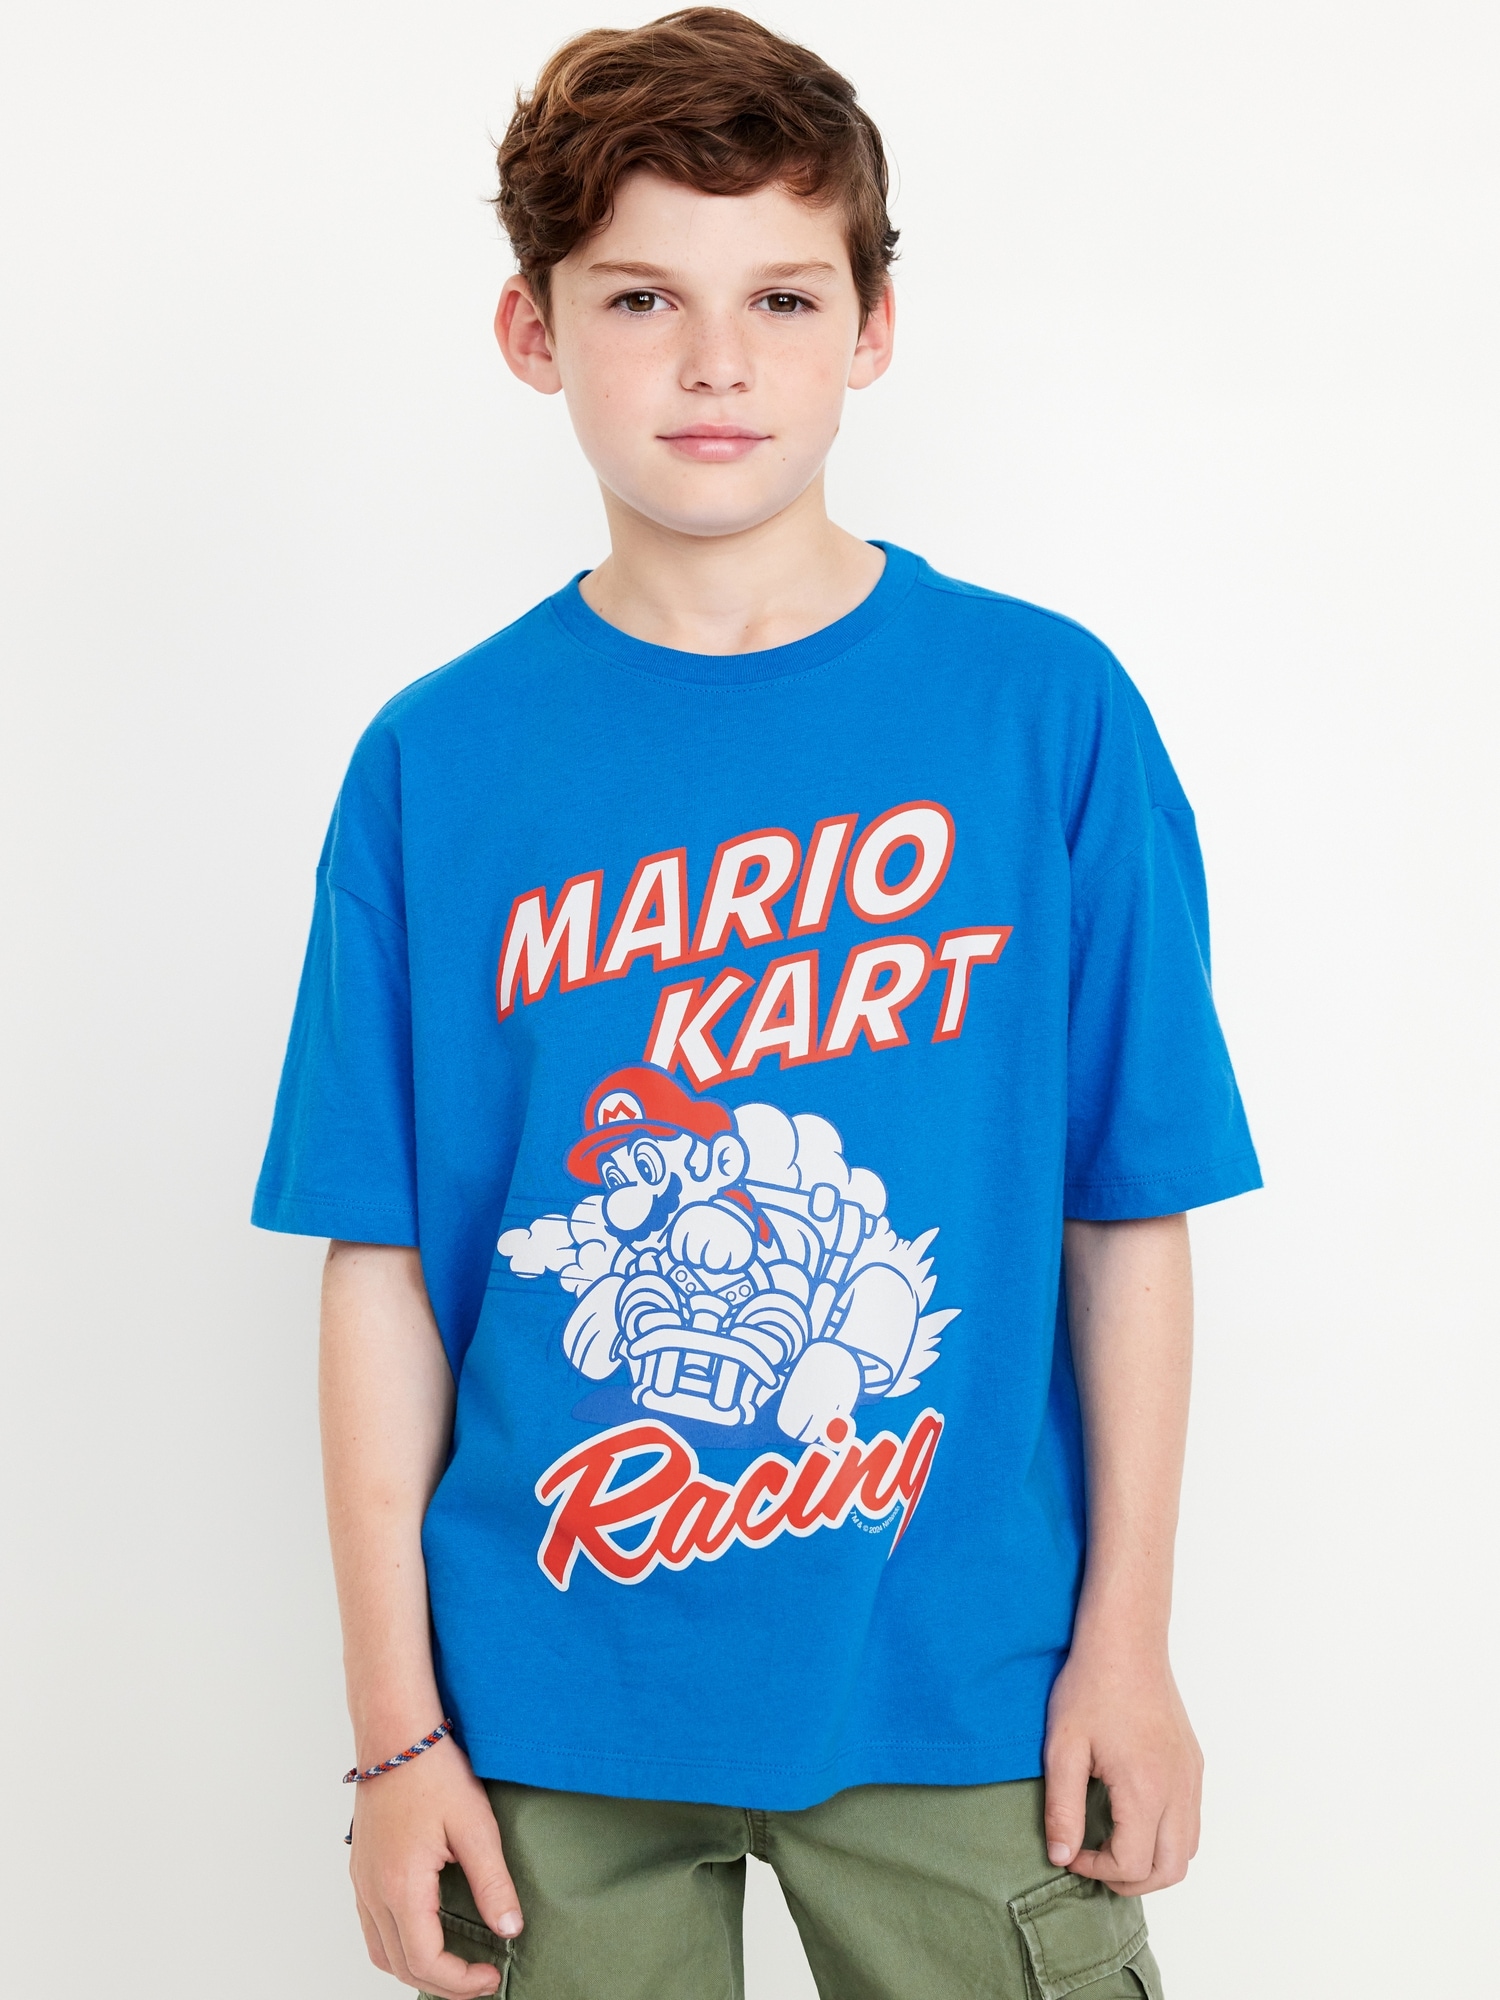 Super Mario Bros. Oversized Gender-Neutral Graphic T-Shirt for Kids